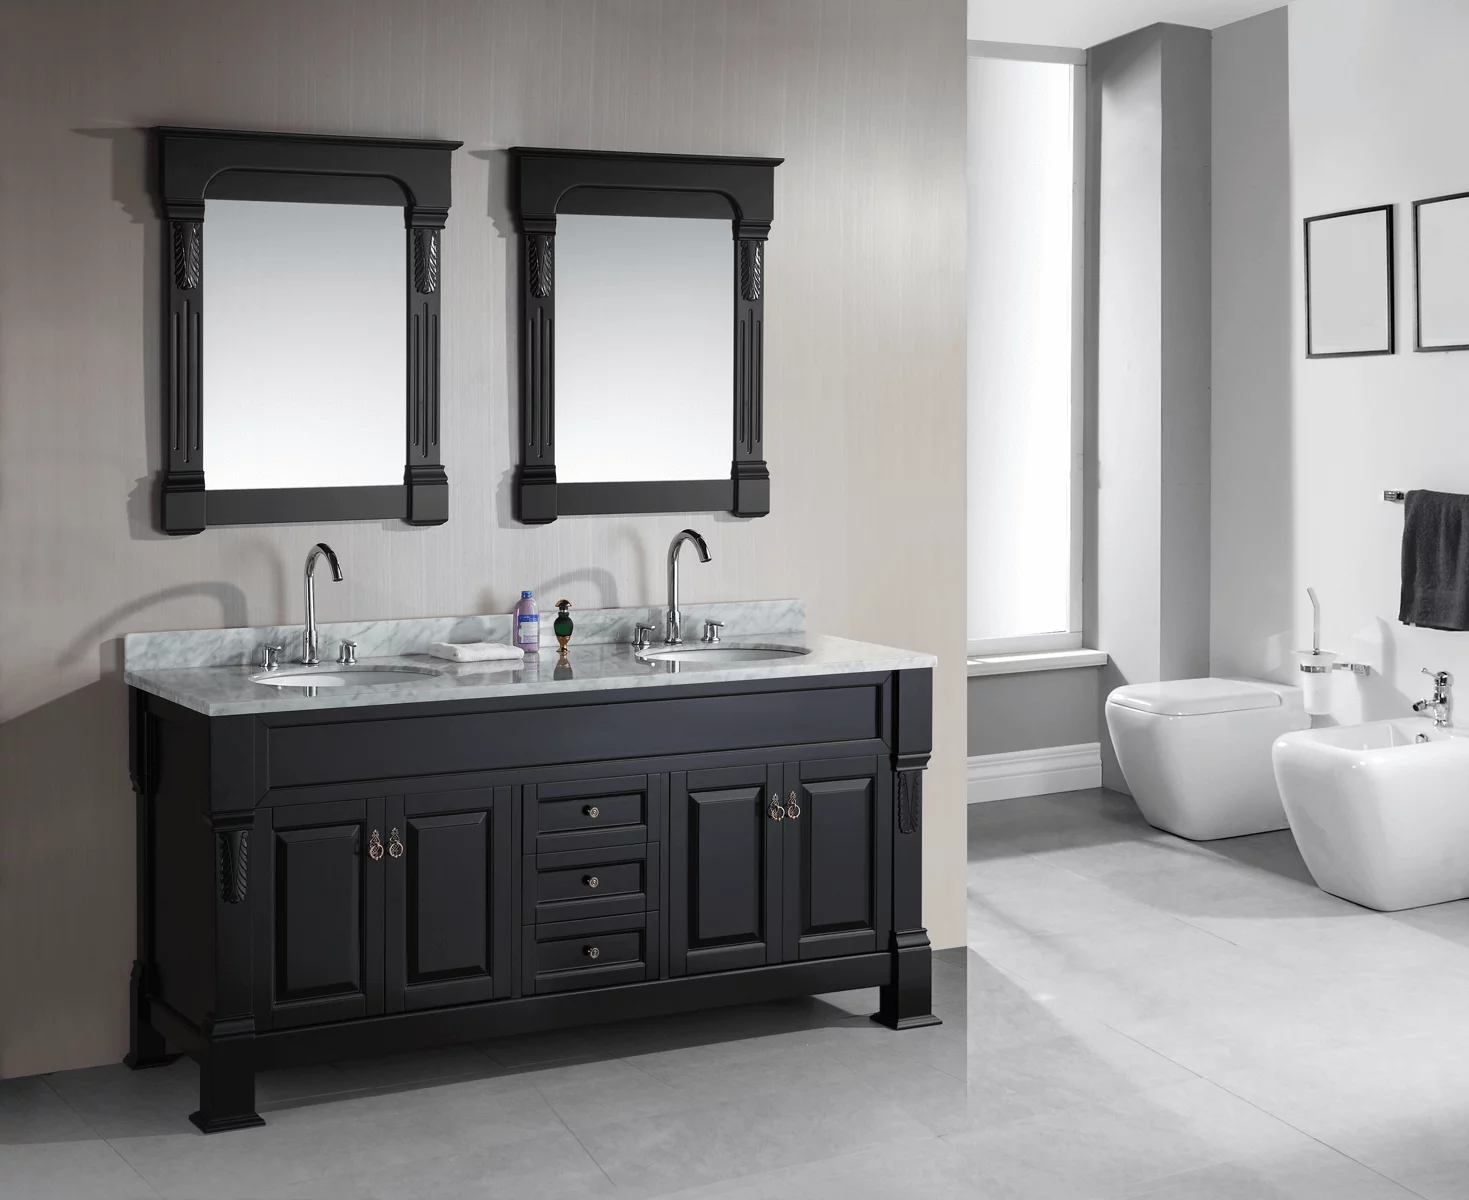 Designing A Bathroom Vanity: How To Choose A Vanity Unit